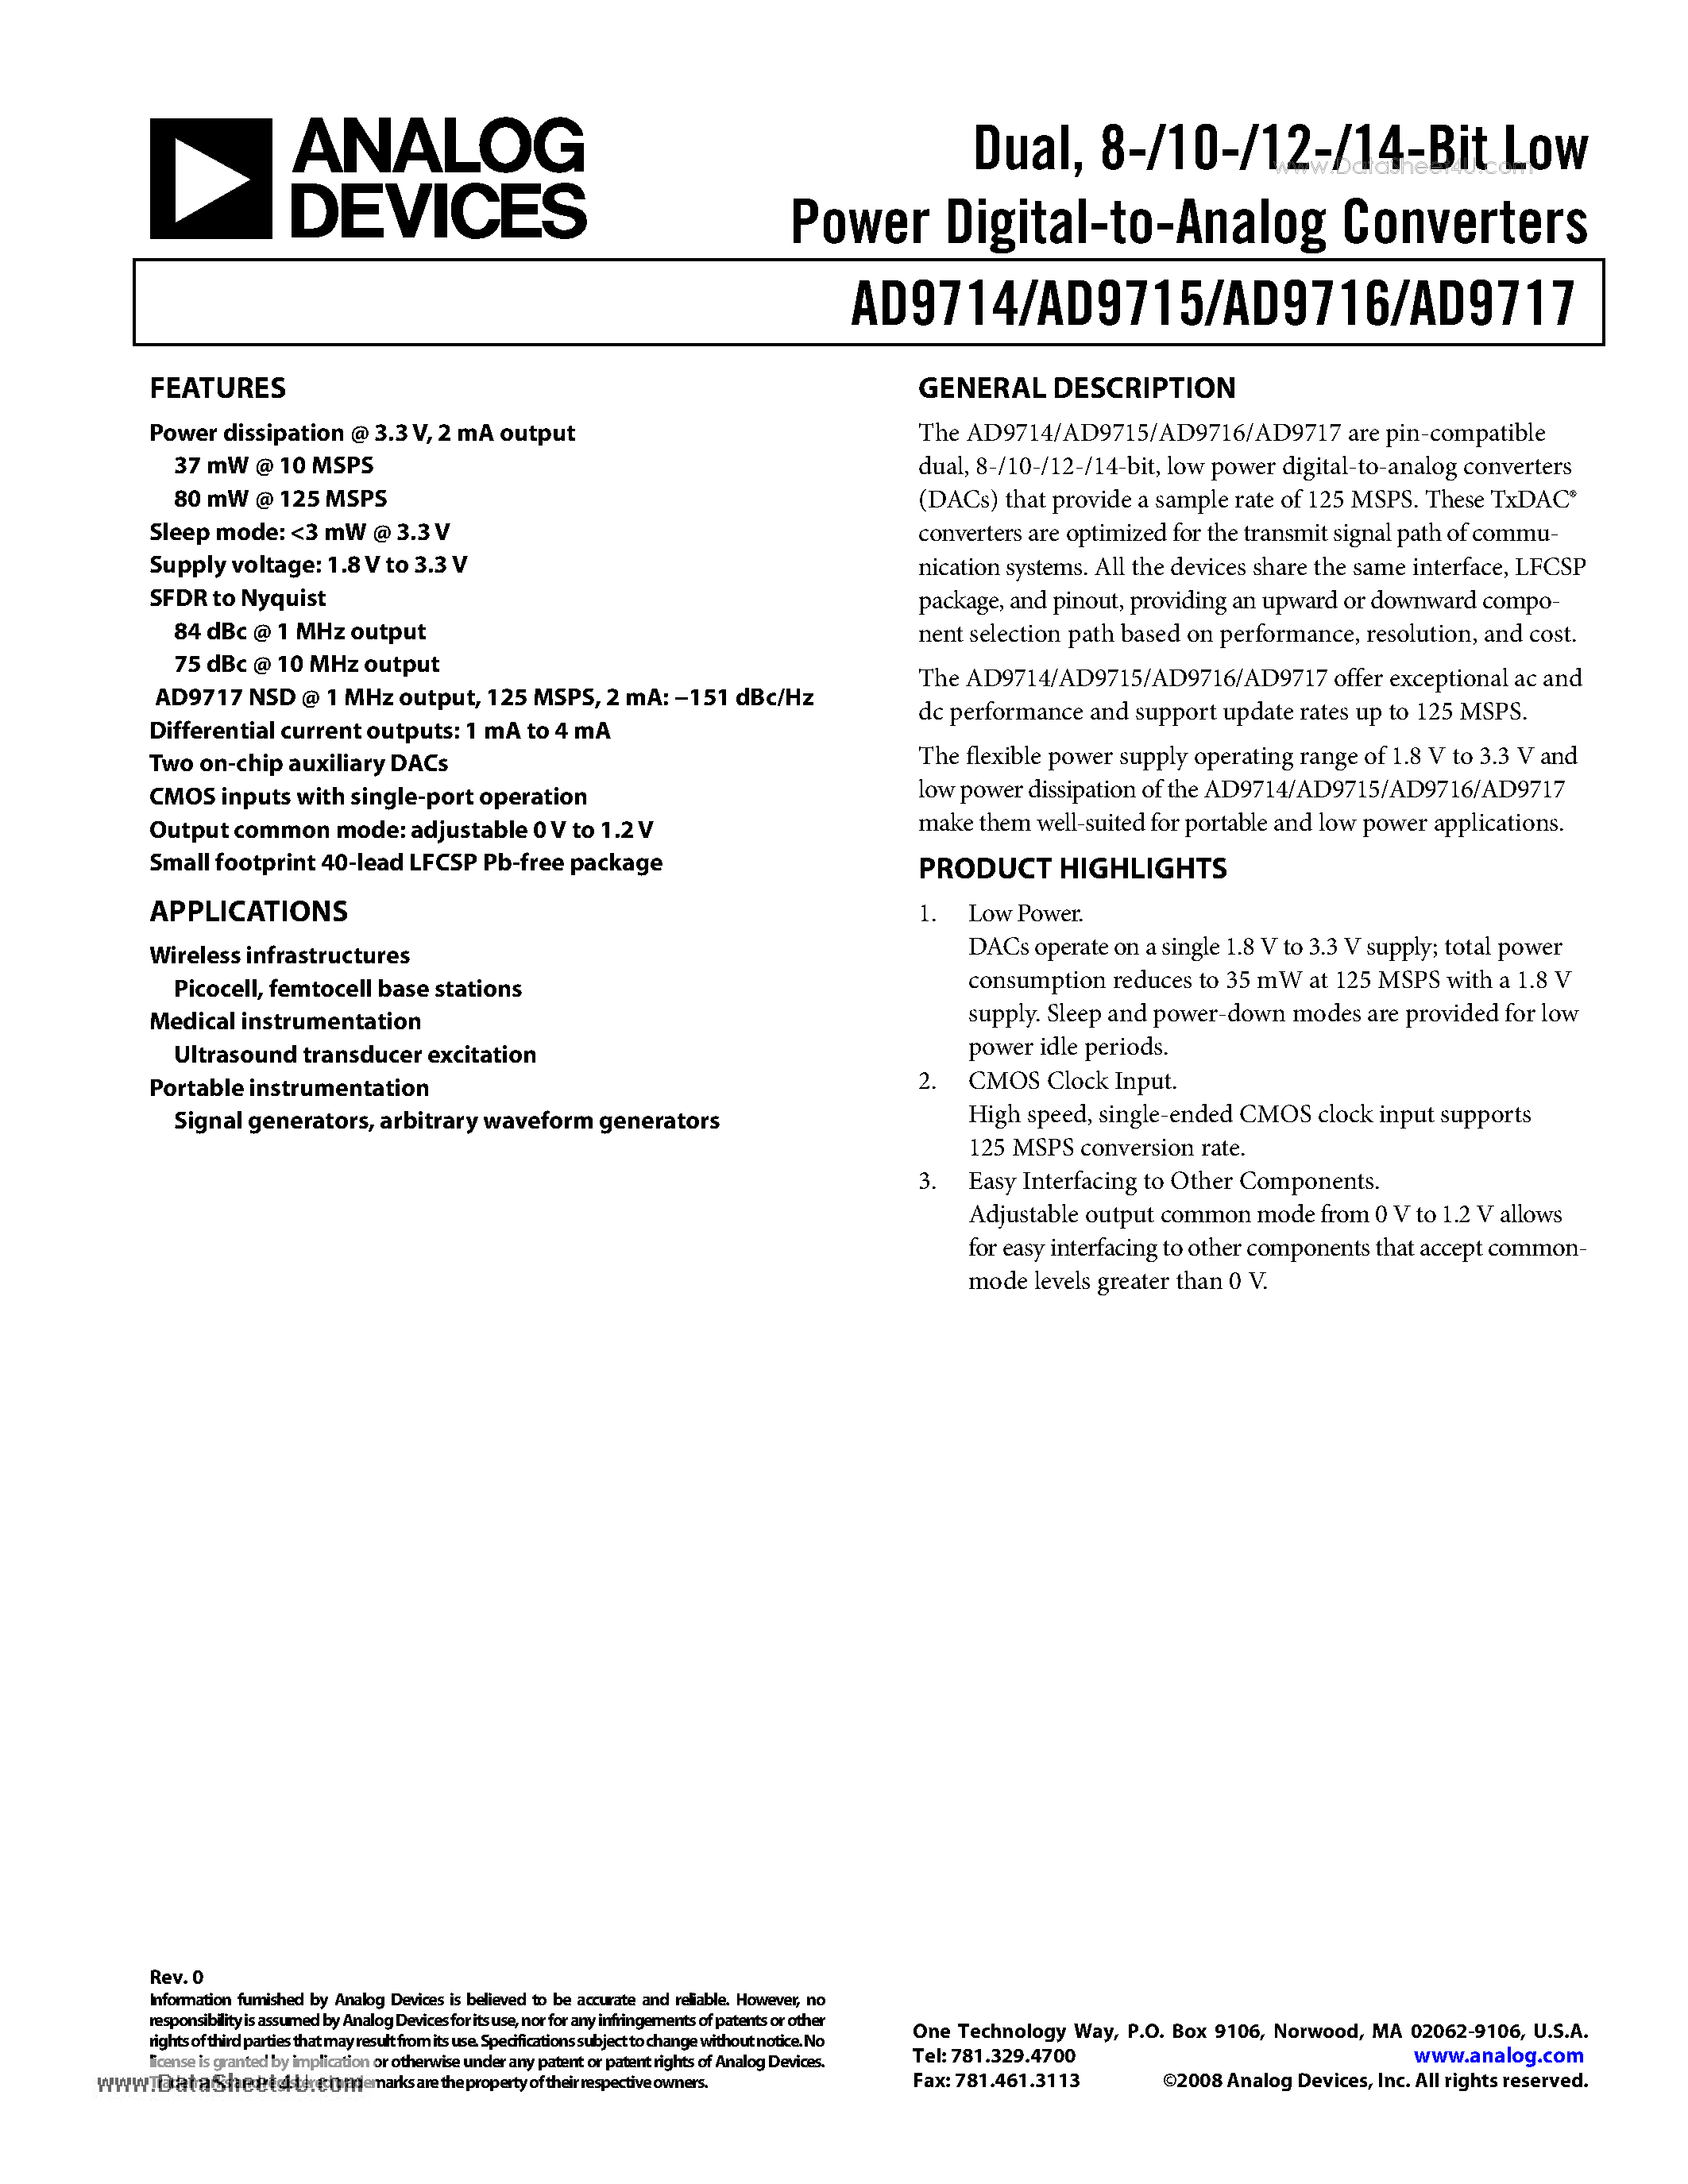 Даташит AD9714-(AD9714 - AD9717) 8-/10-/12-/14-Bit Low Power Digital-to-Analog Converters страница 1